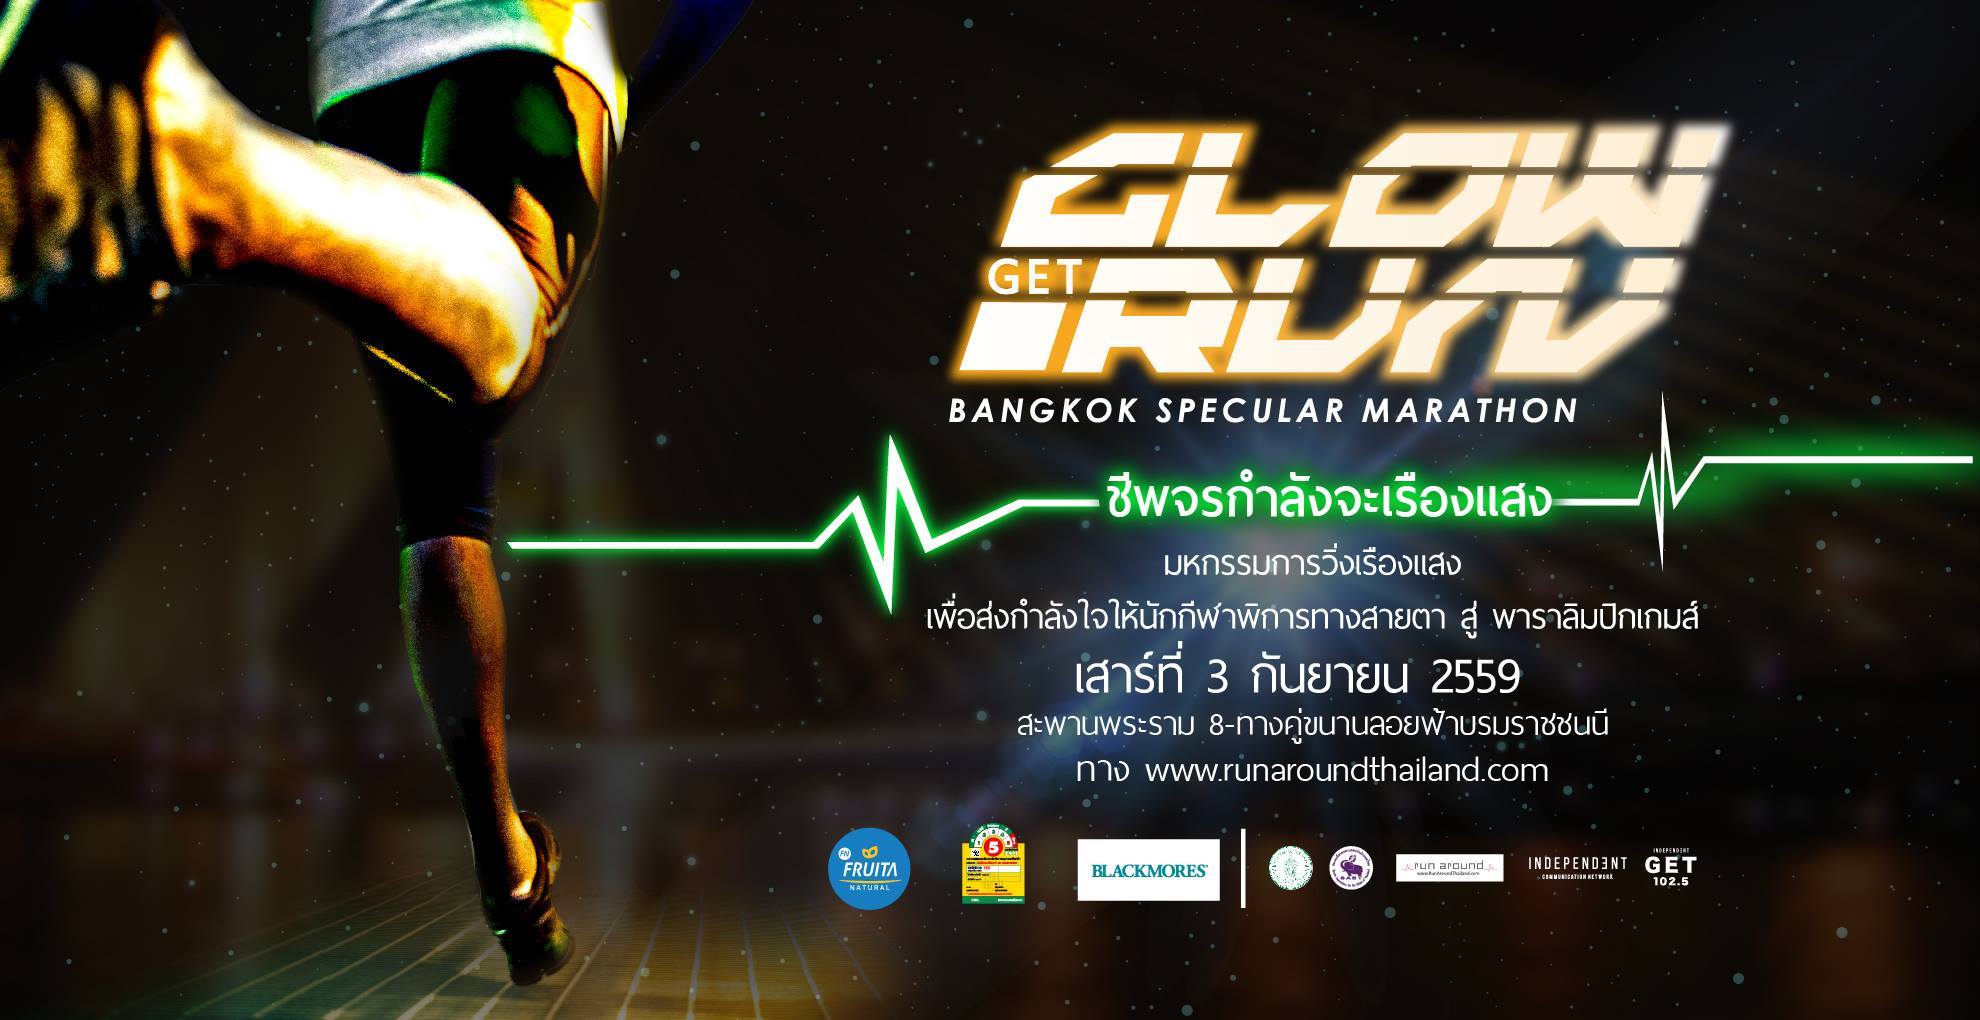 Get Glow Run : Bangkok Specular Marathon